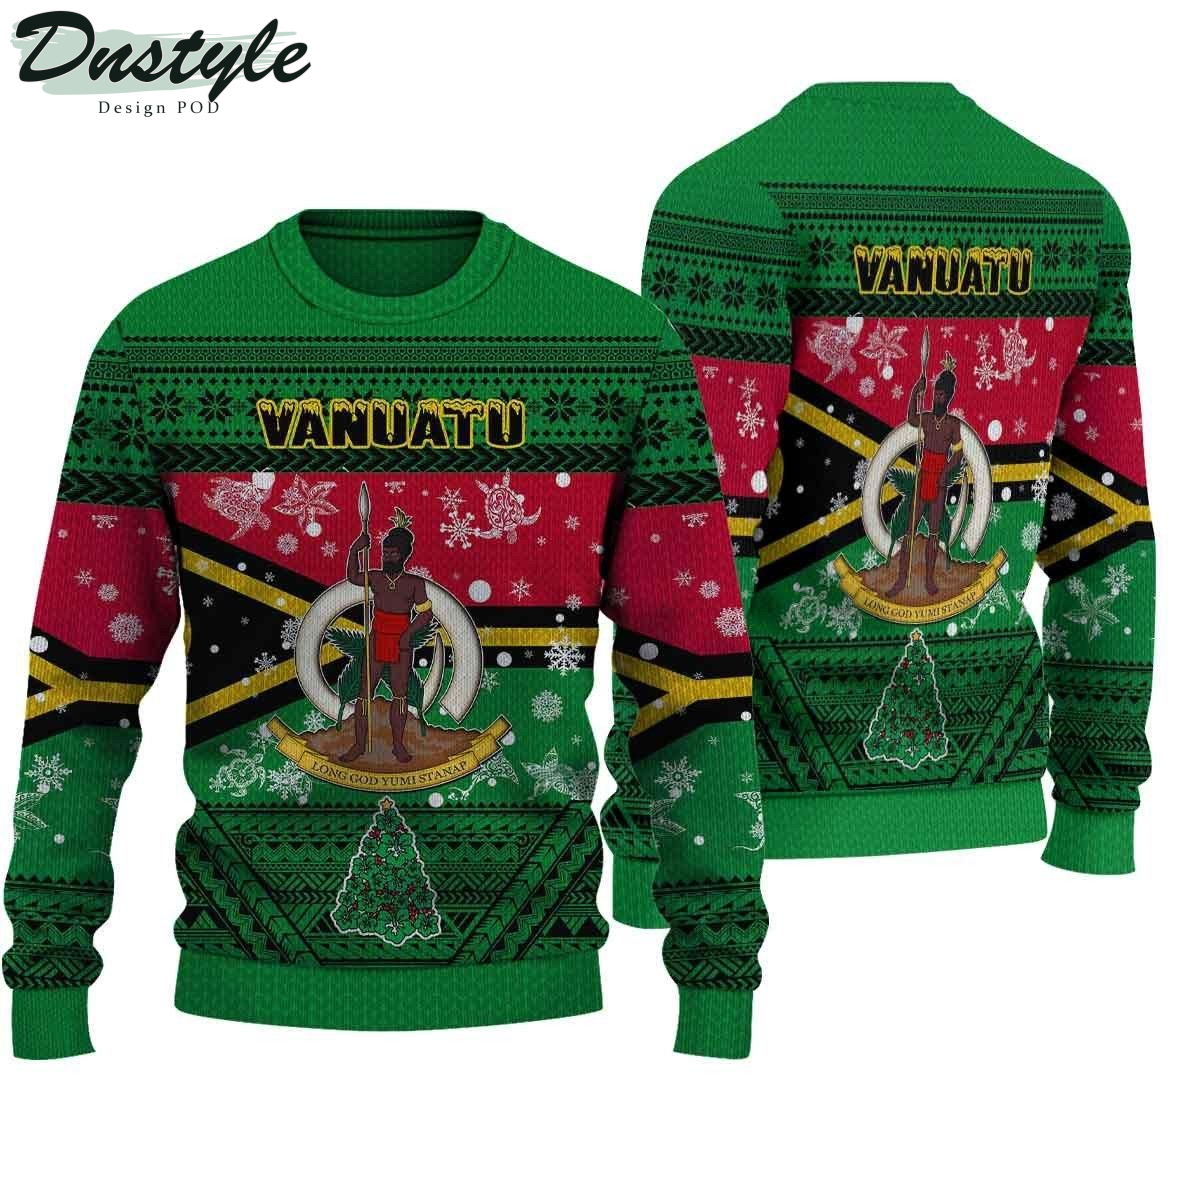 Vanuatu ugly christmas sweater